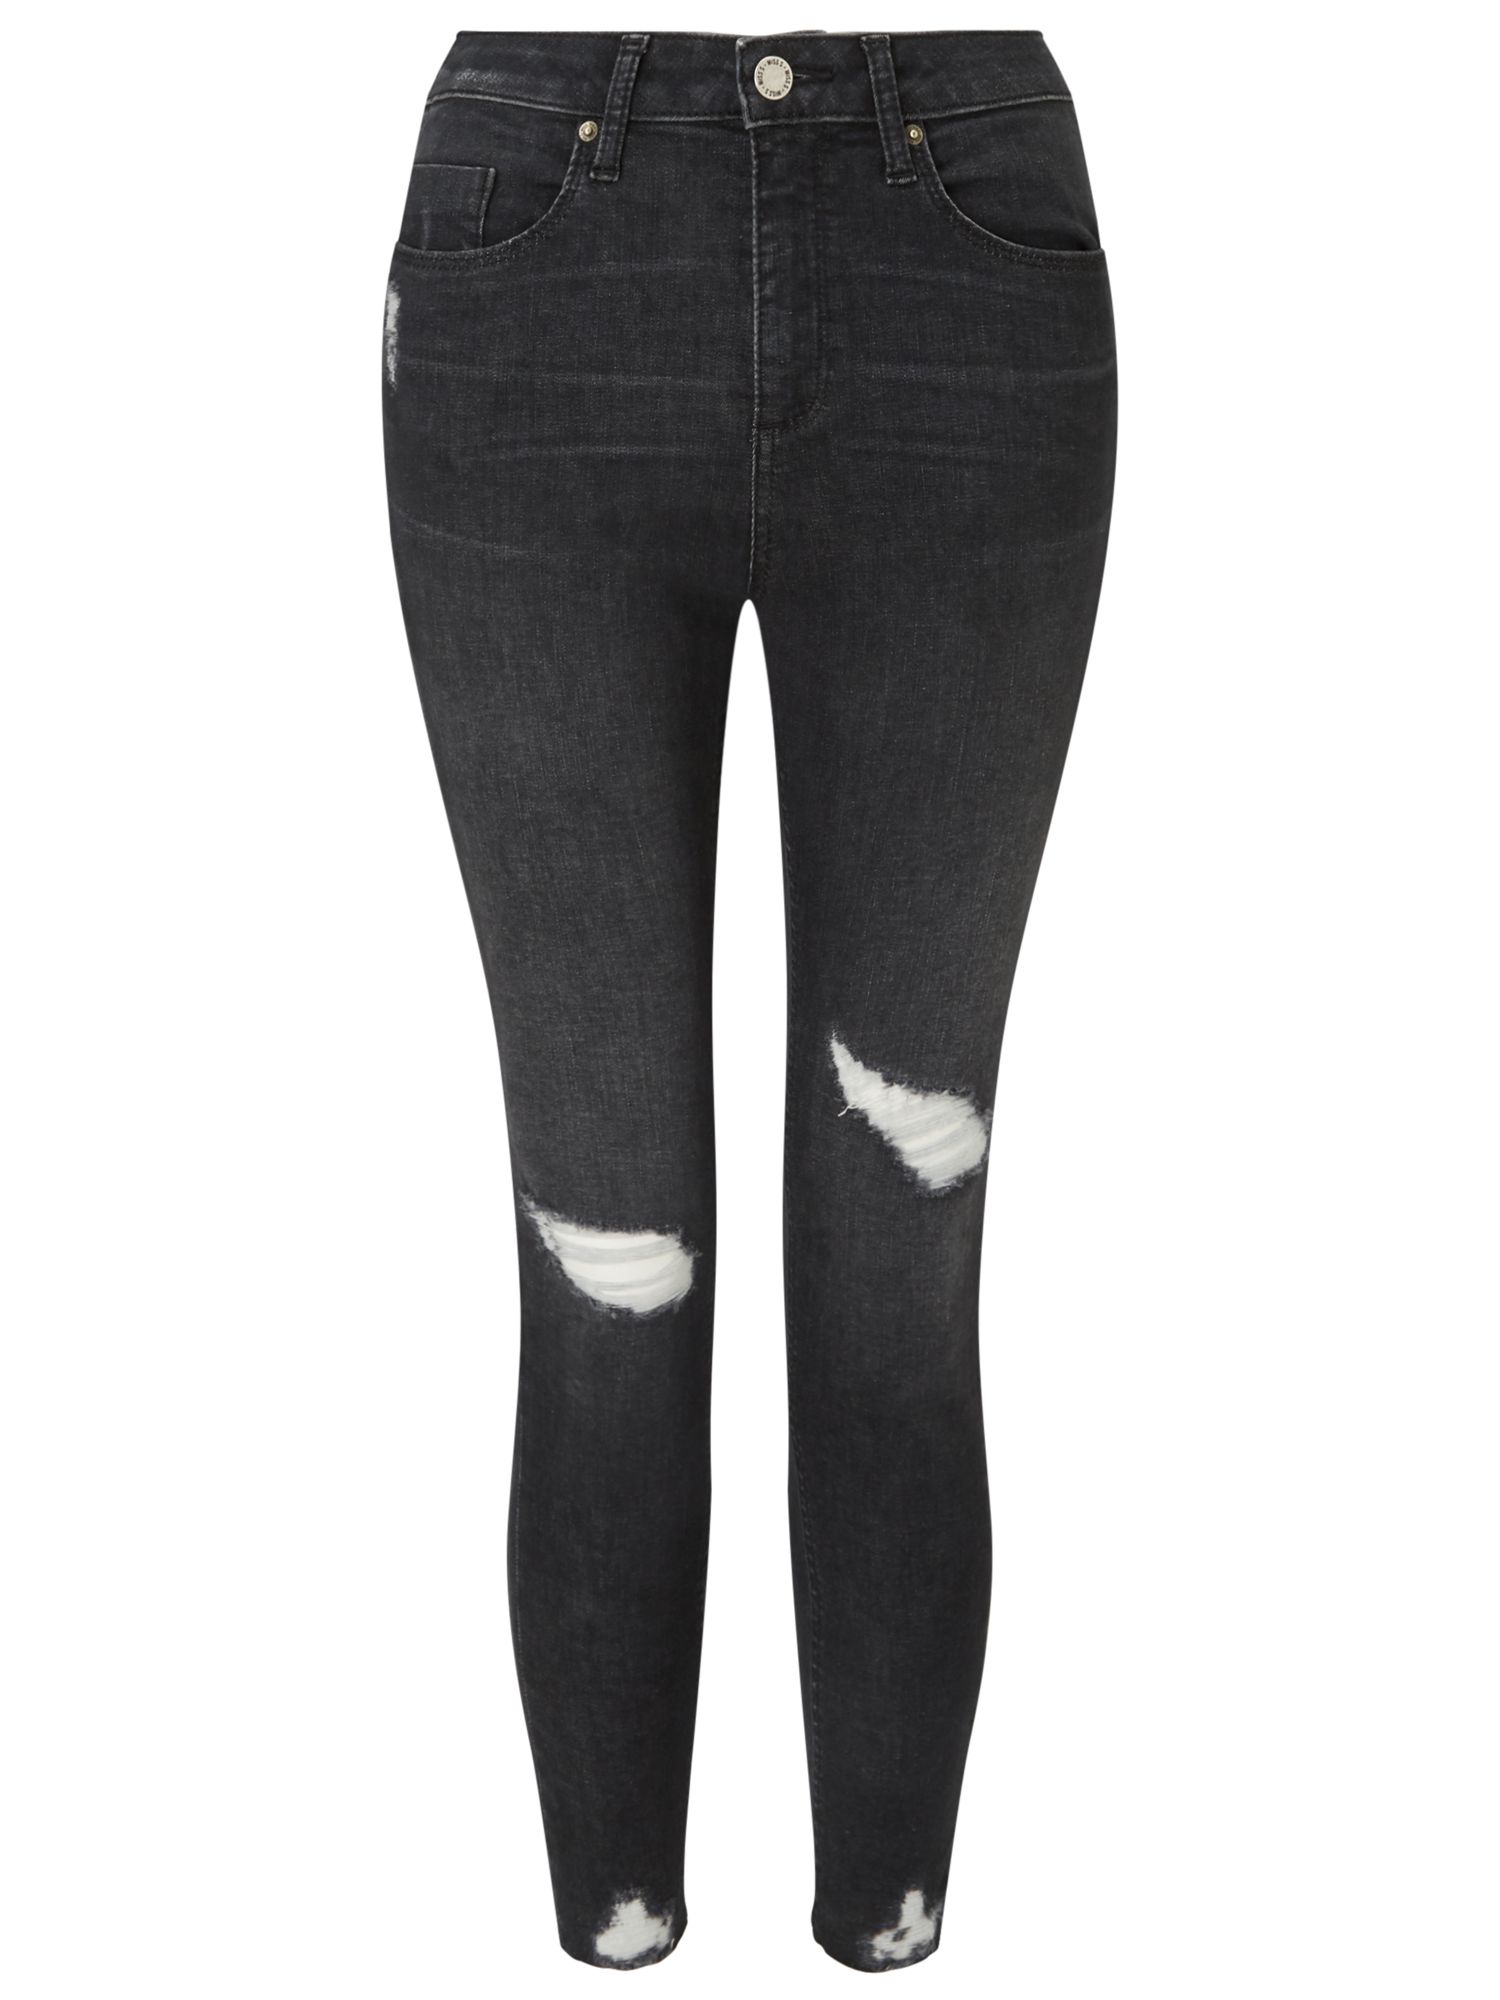 miss selfridge black jeans